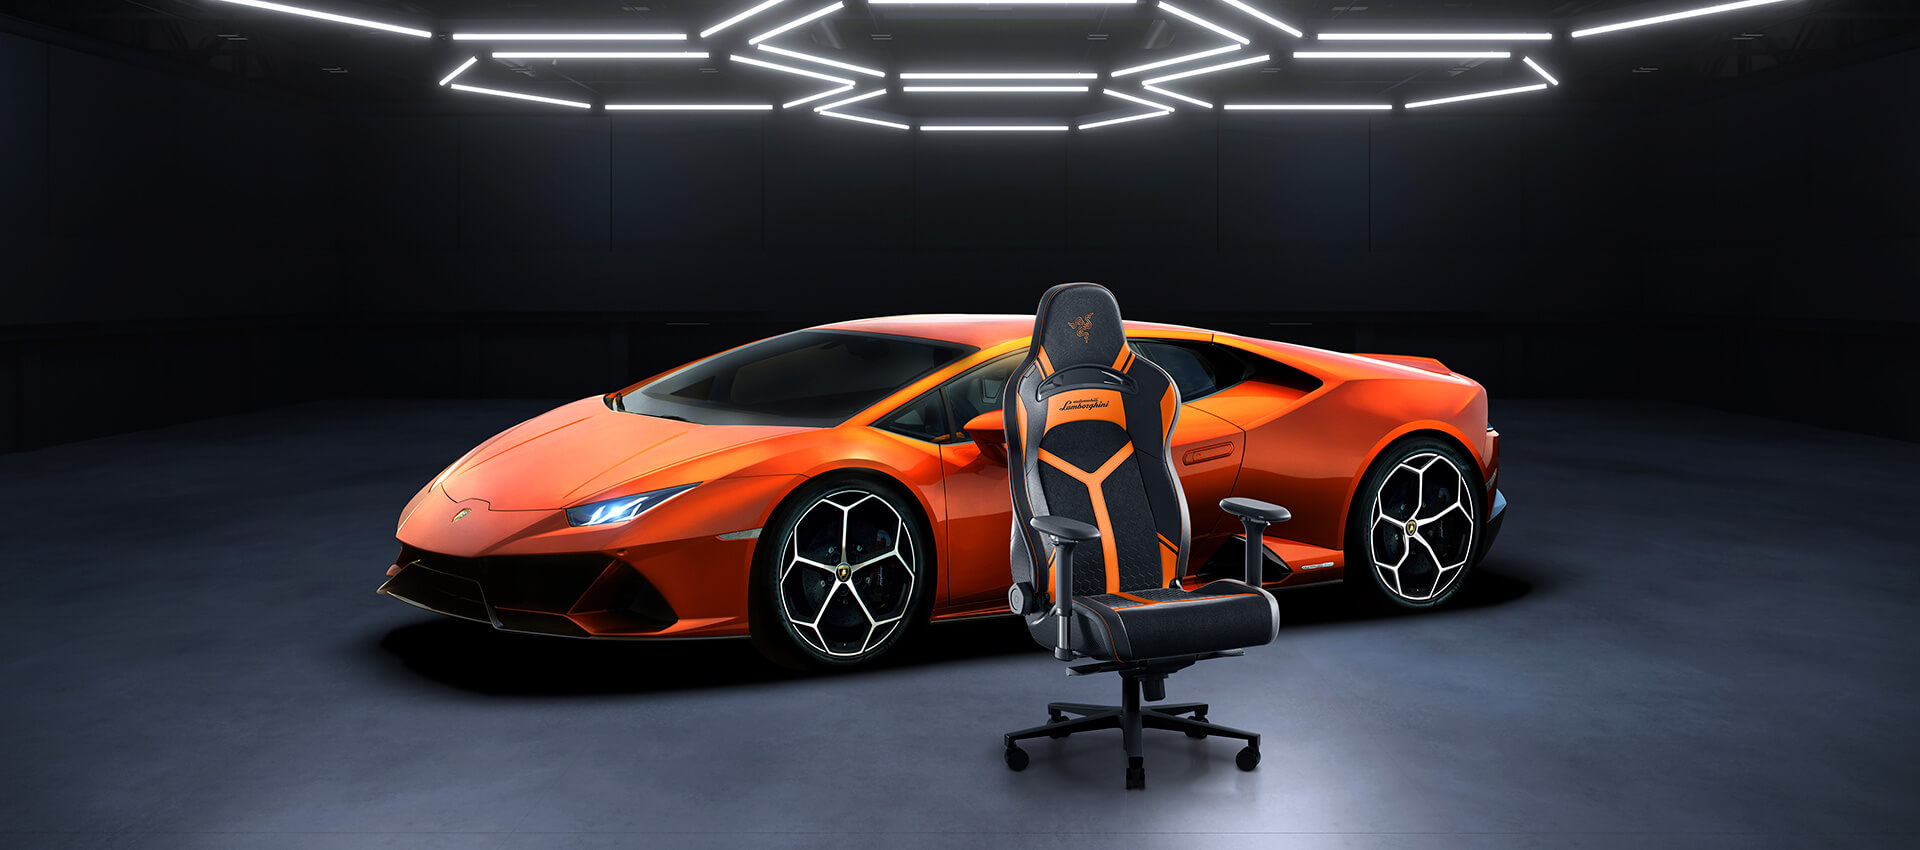 Razer Enki Pro Automobili Lamborghini Edition on test: maximum comfort